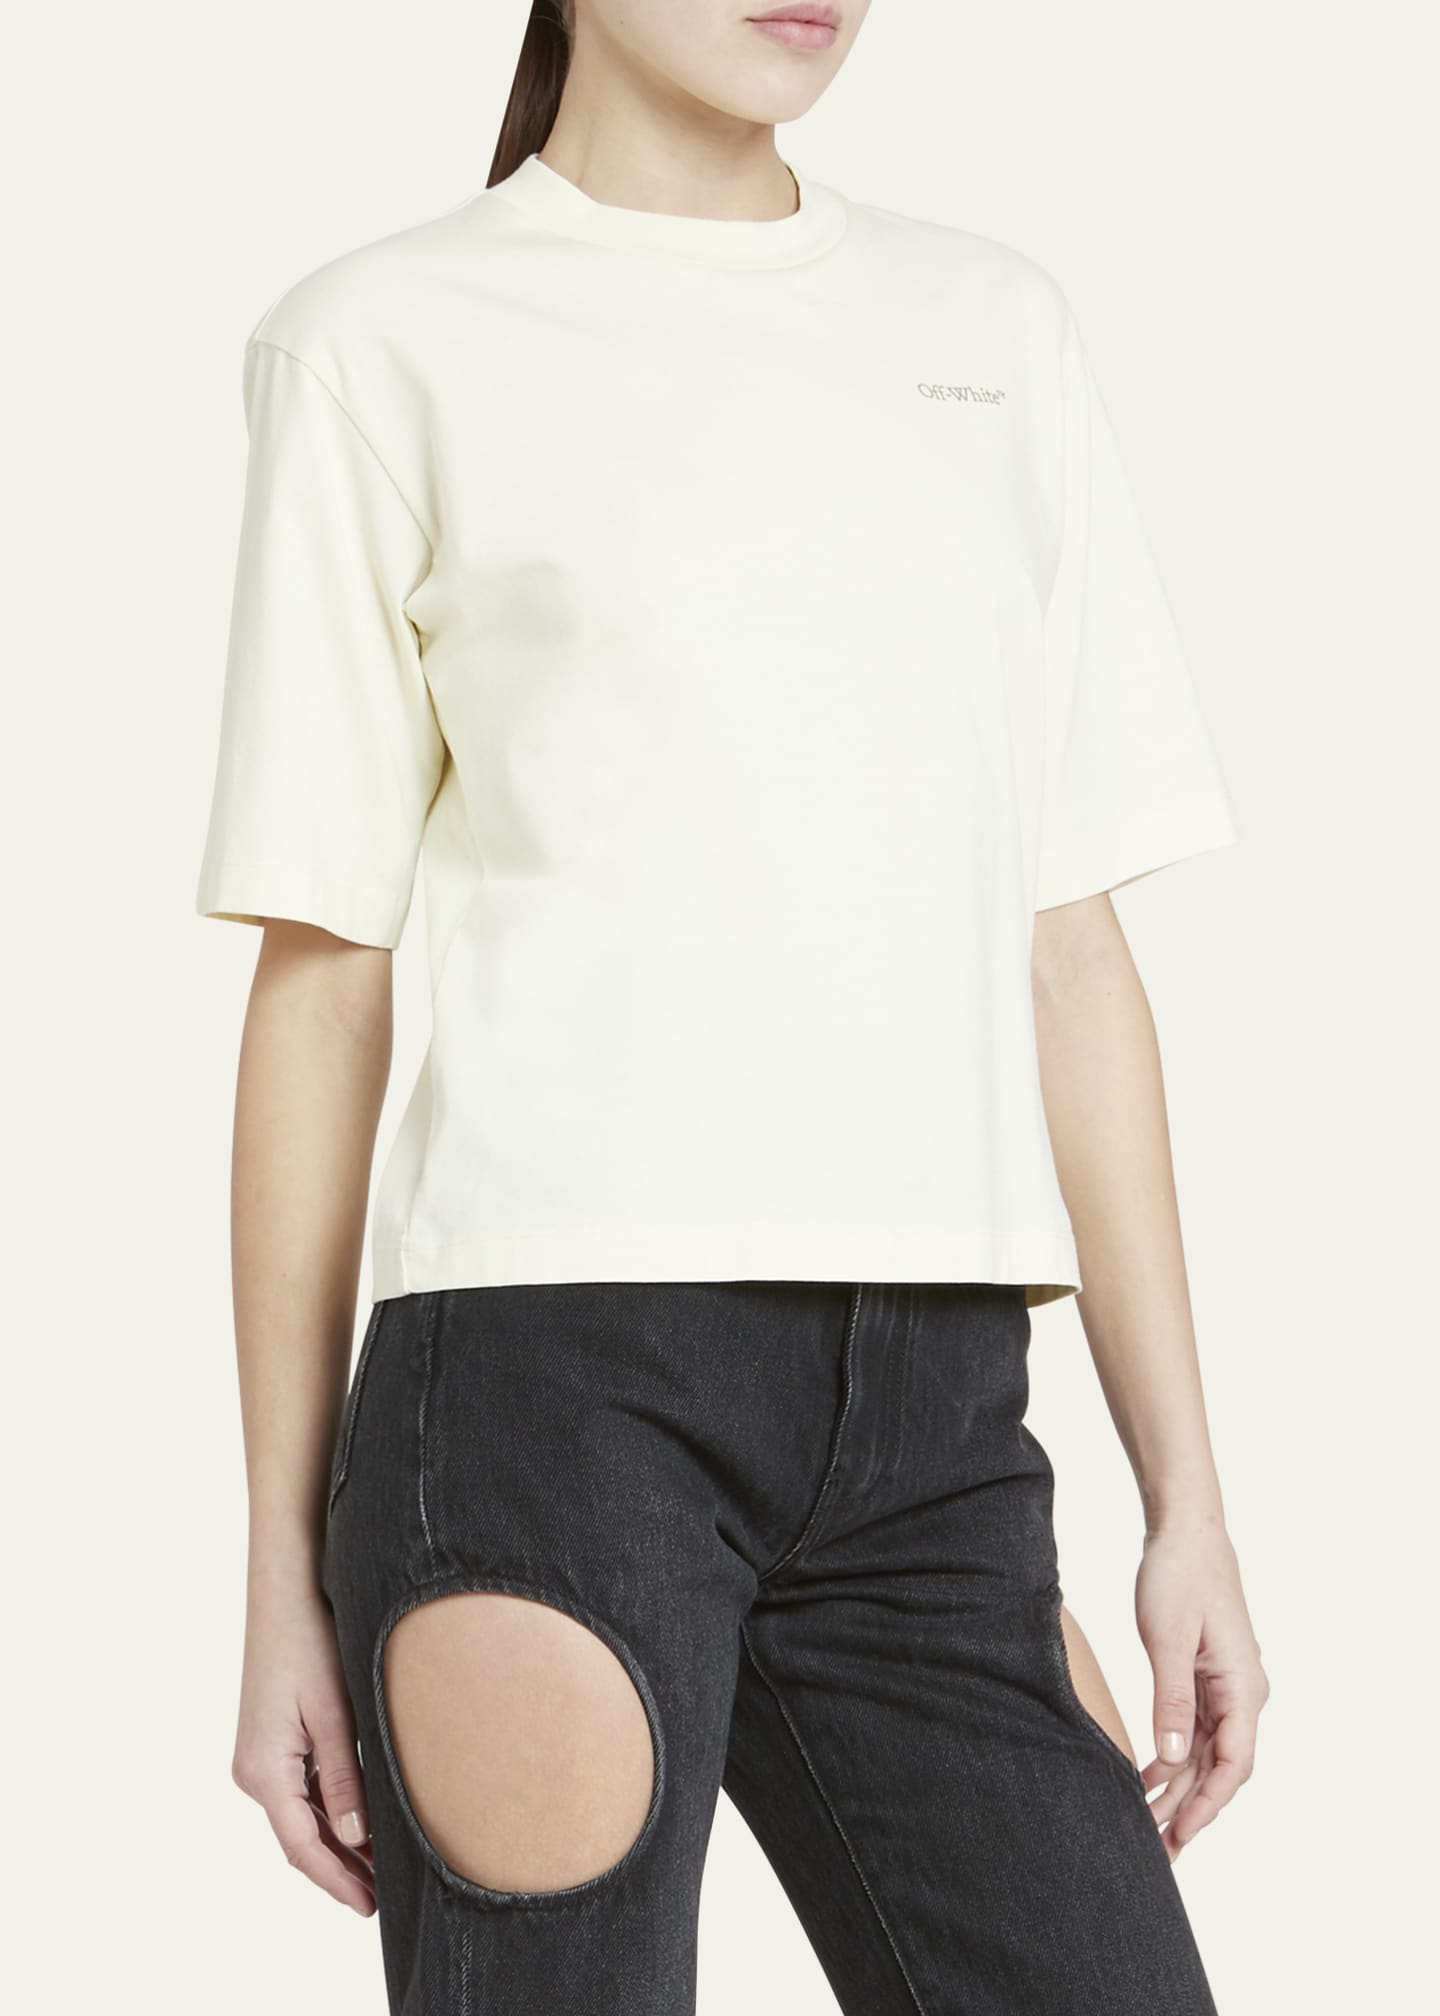 Off-White Walking Man Arrow T-Shirt - Bergdorf Goodman